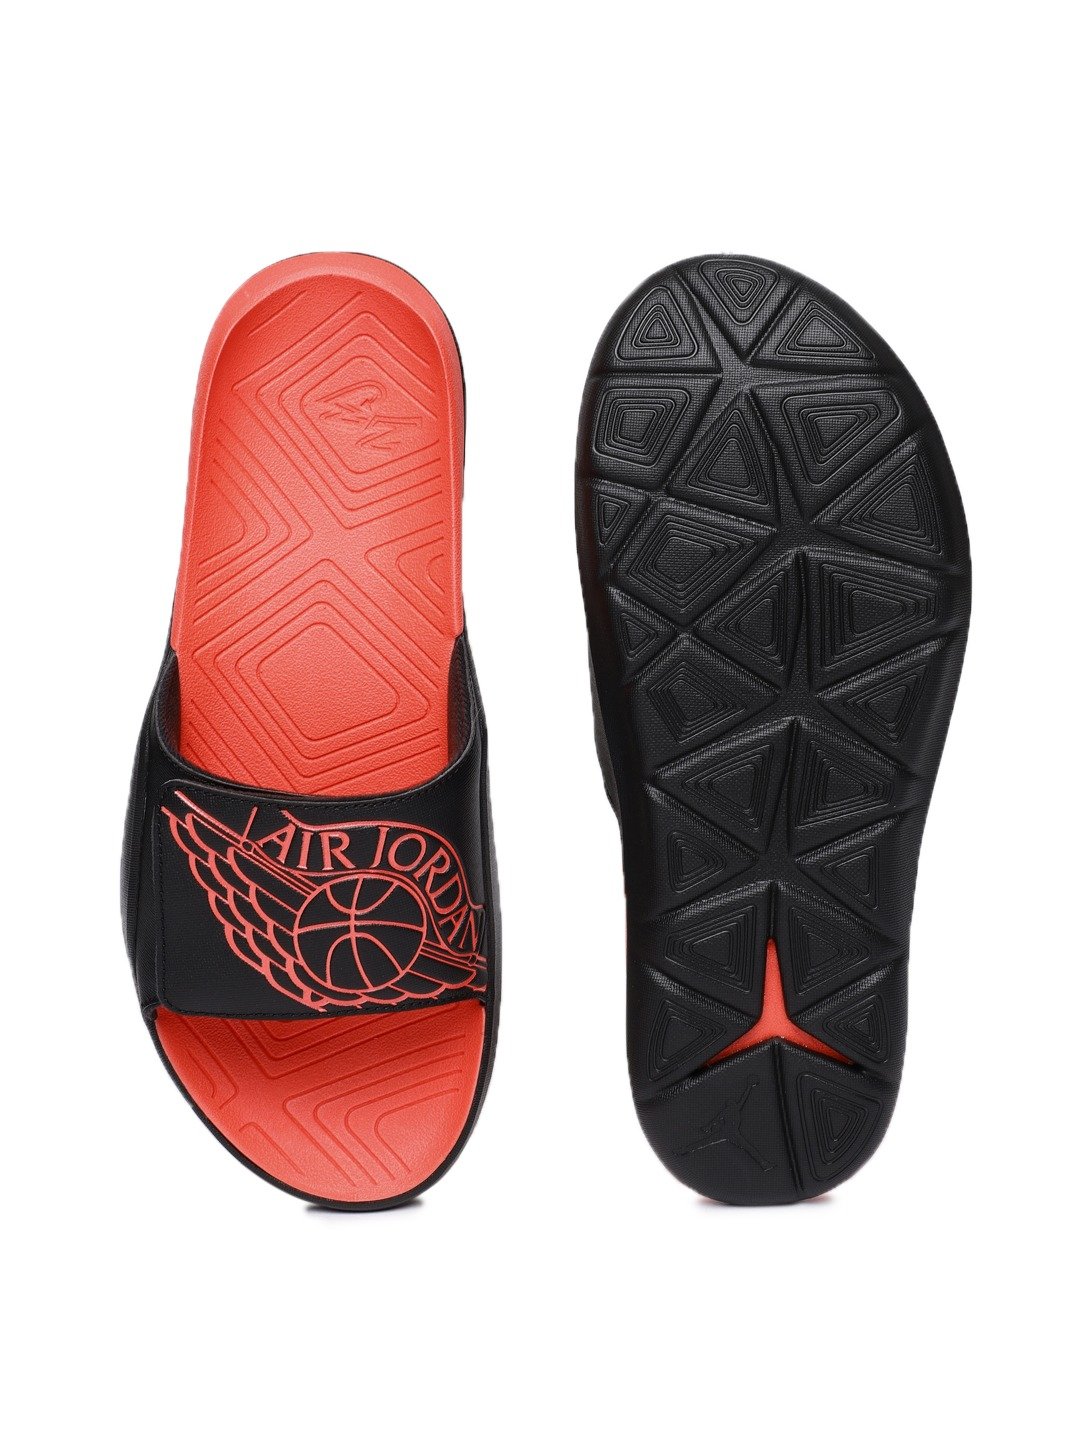 Men Black & Red Jordan Hydro 7 Printed Sliders - Discount Store